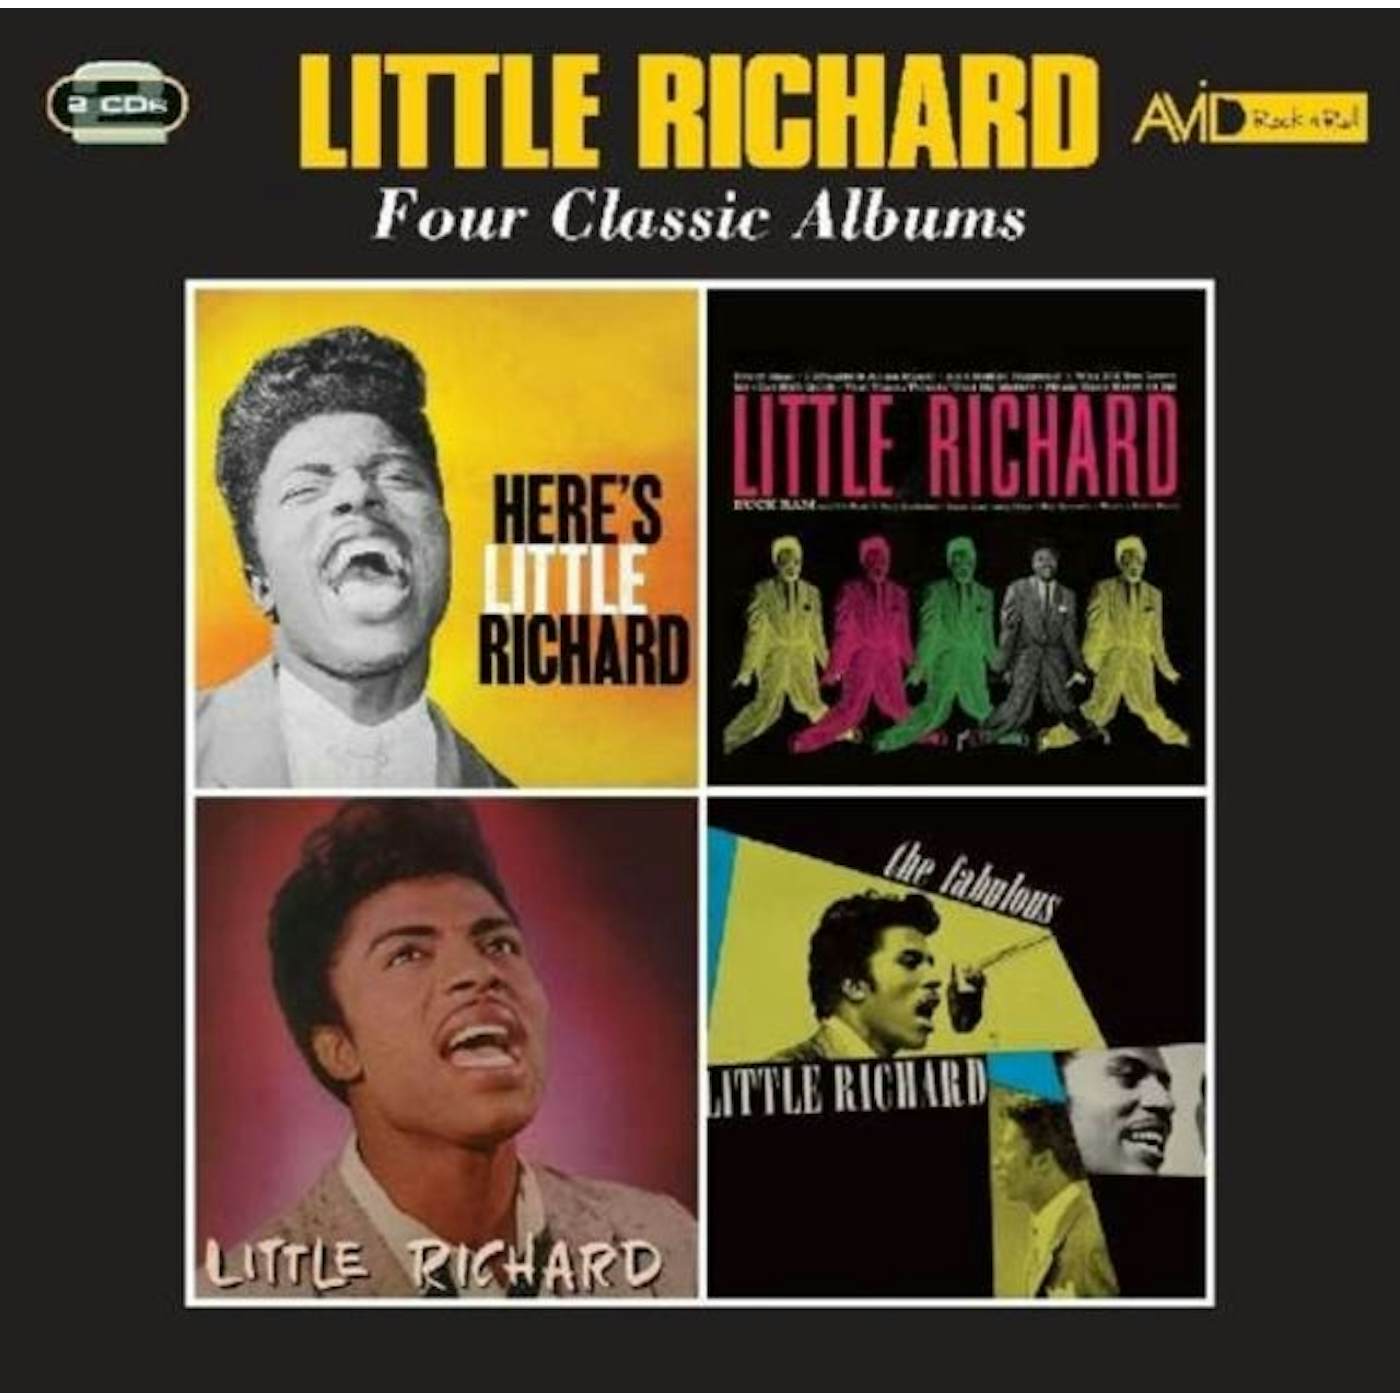 Little Richard CD - Four Classic Albums (Here's Little Richard / Little Richard / Little Richard / The Fabulous Little Richard)